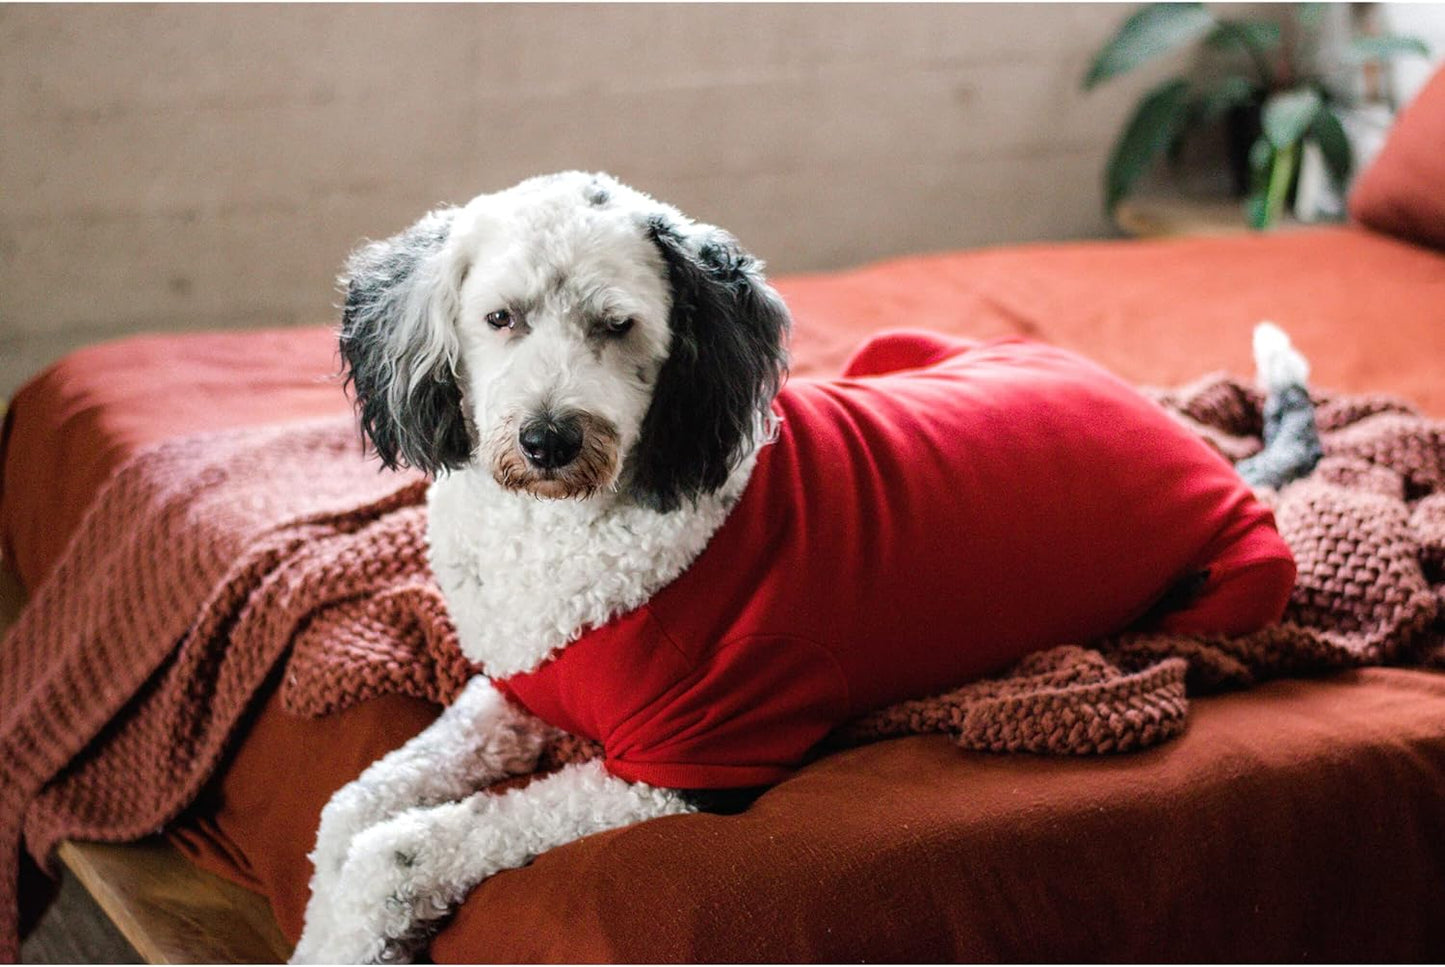 Midlee Red Dog Pajamas